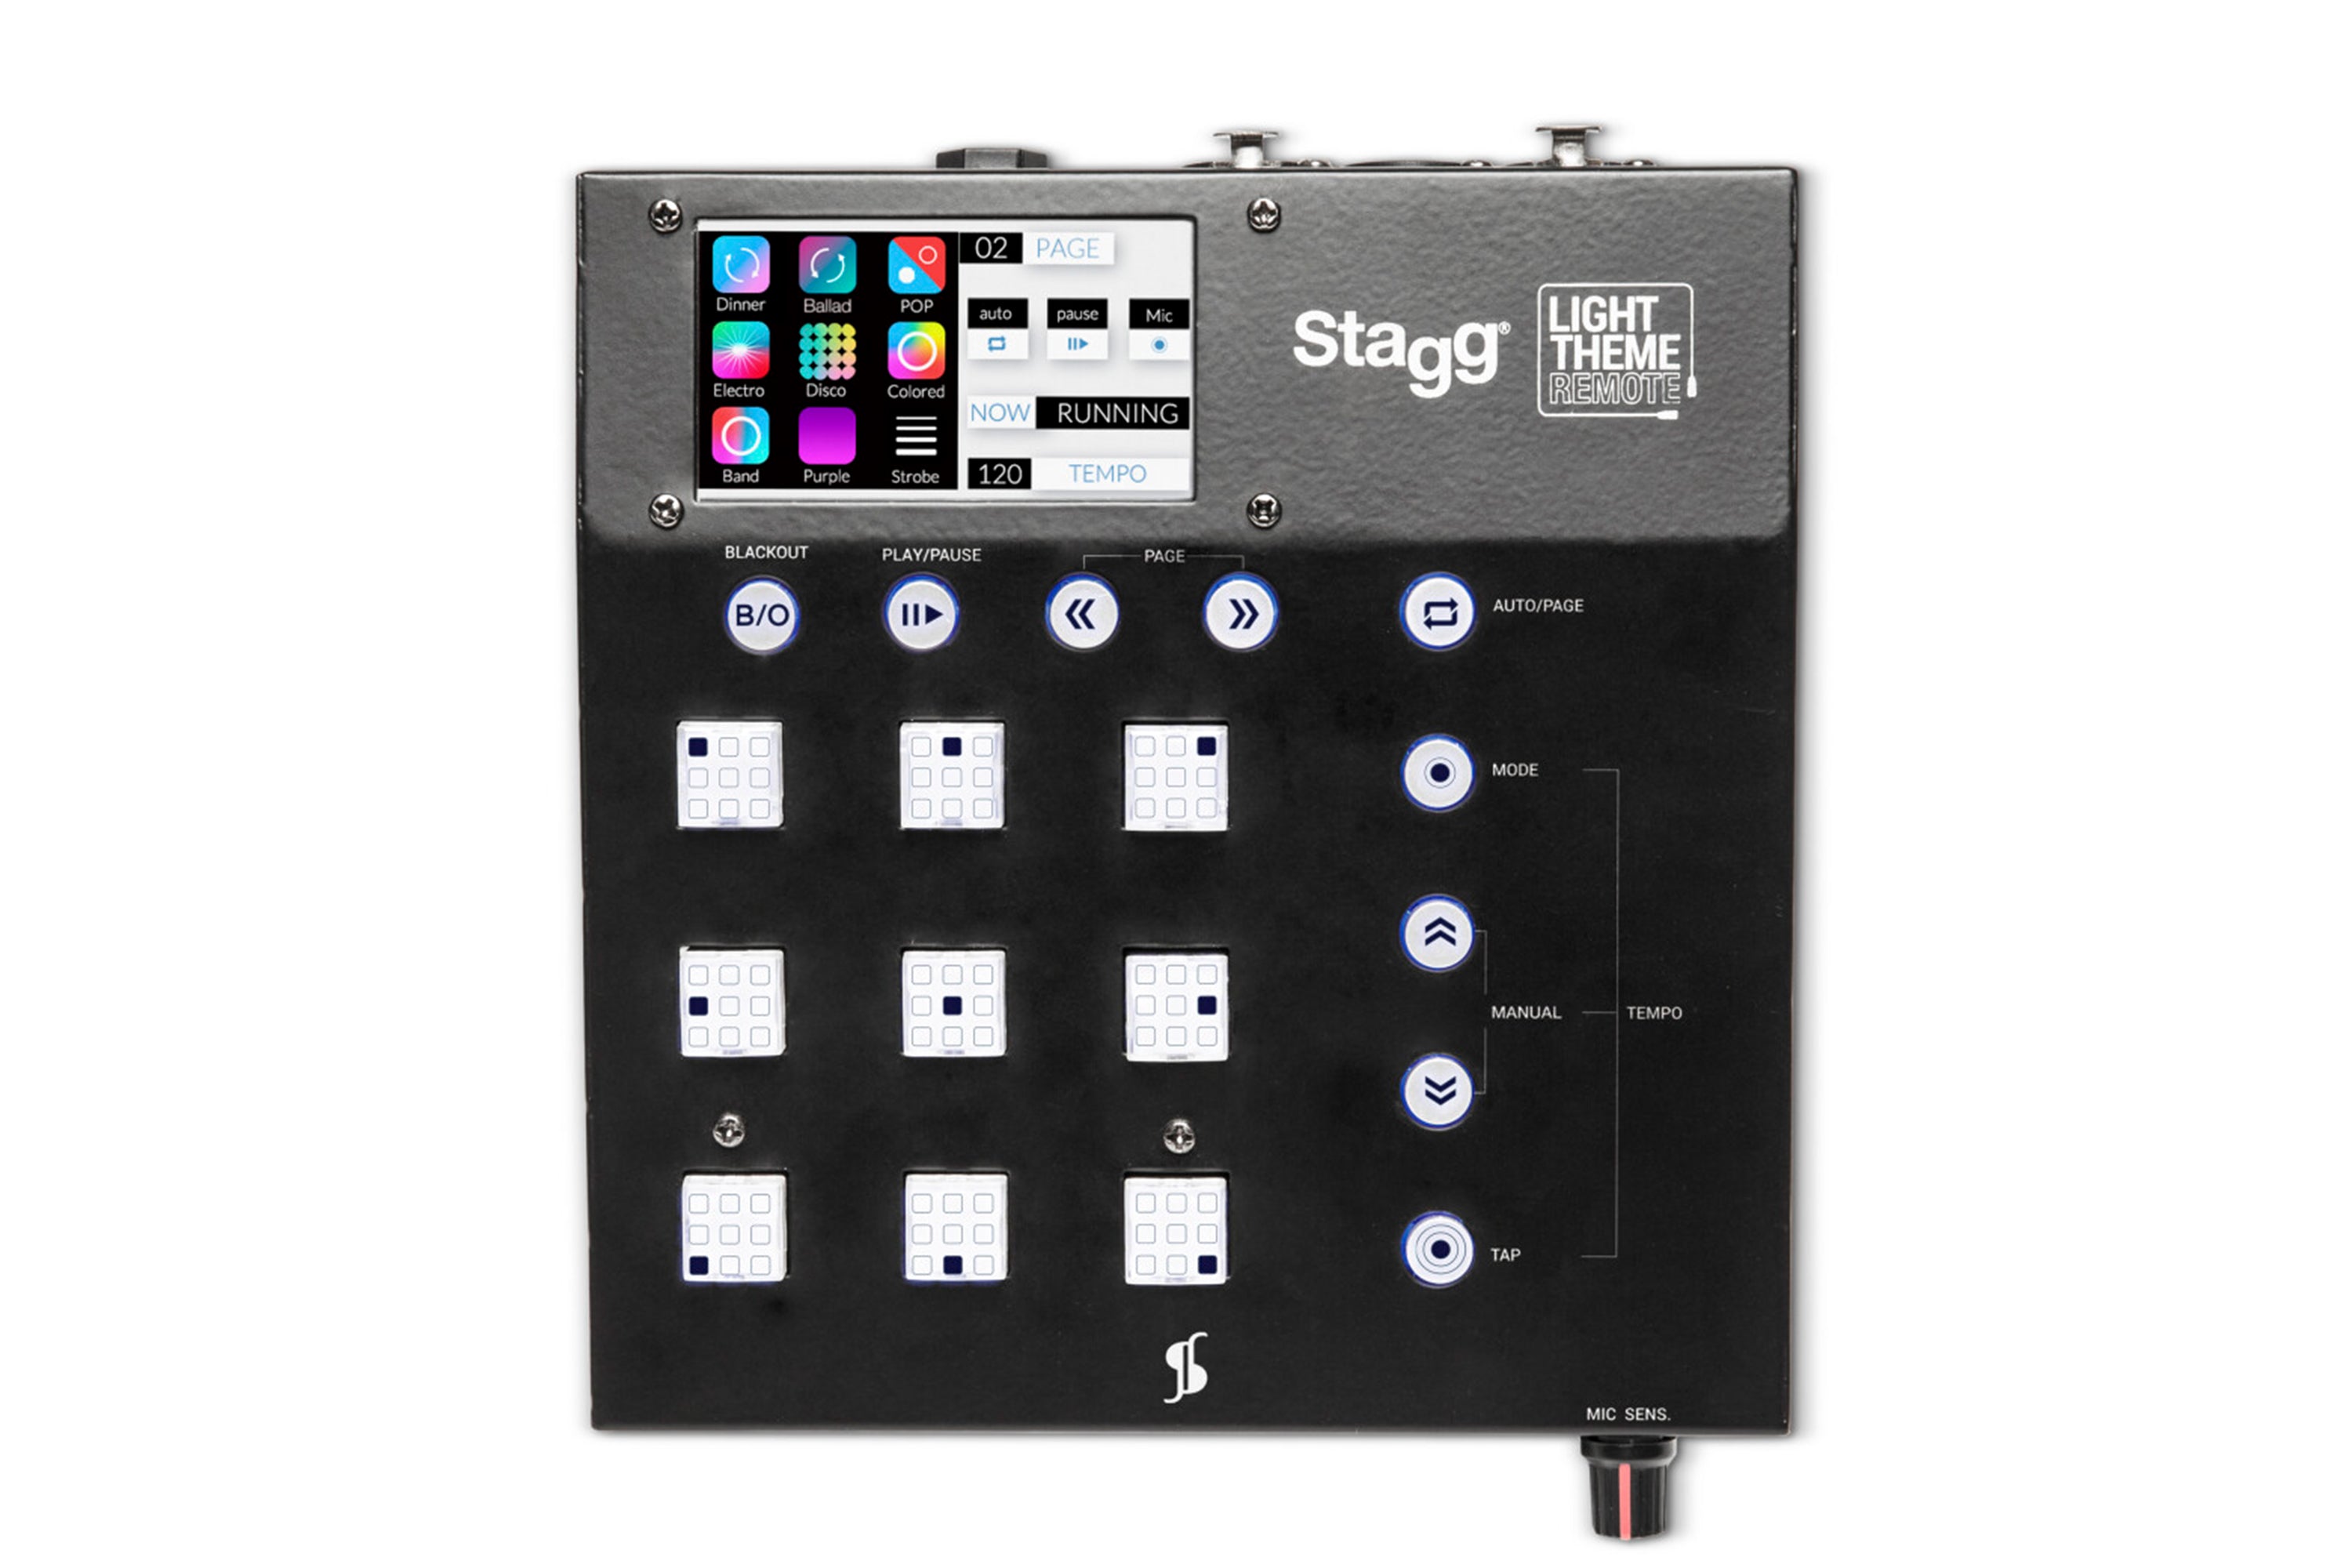 Stagg USA Light Theme Remote